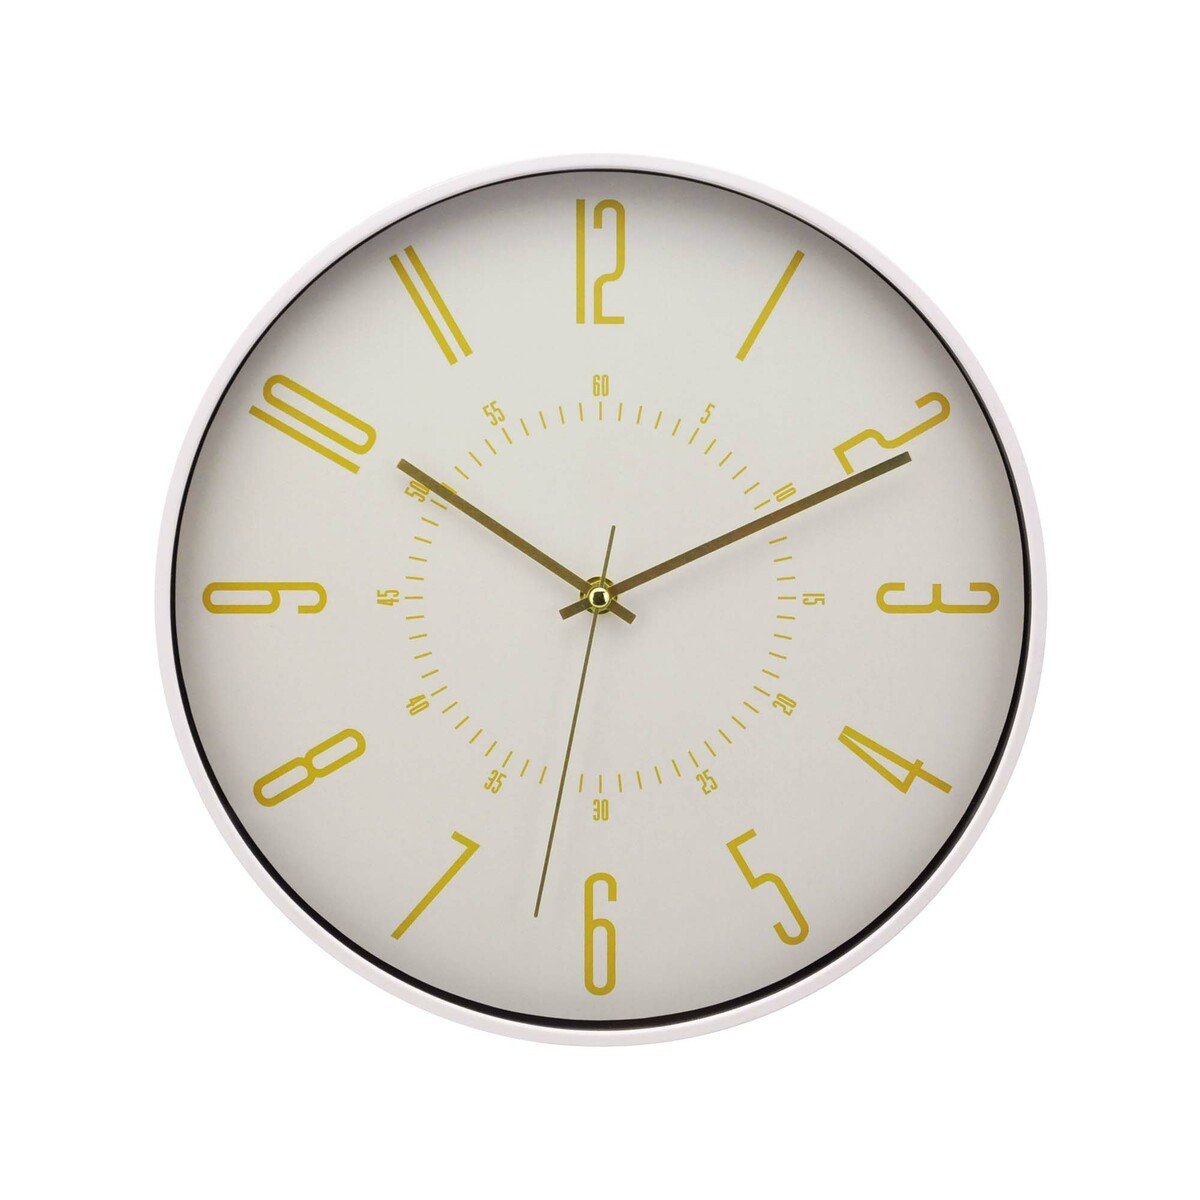 Eastime Wall Clock EG6911E 31.5cm Assorted